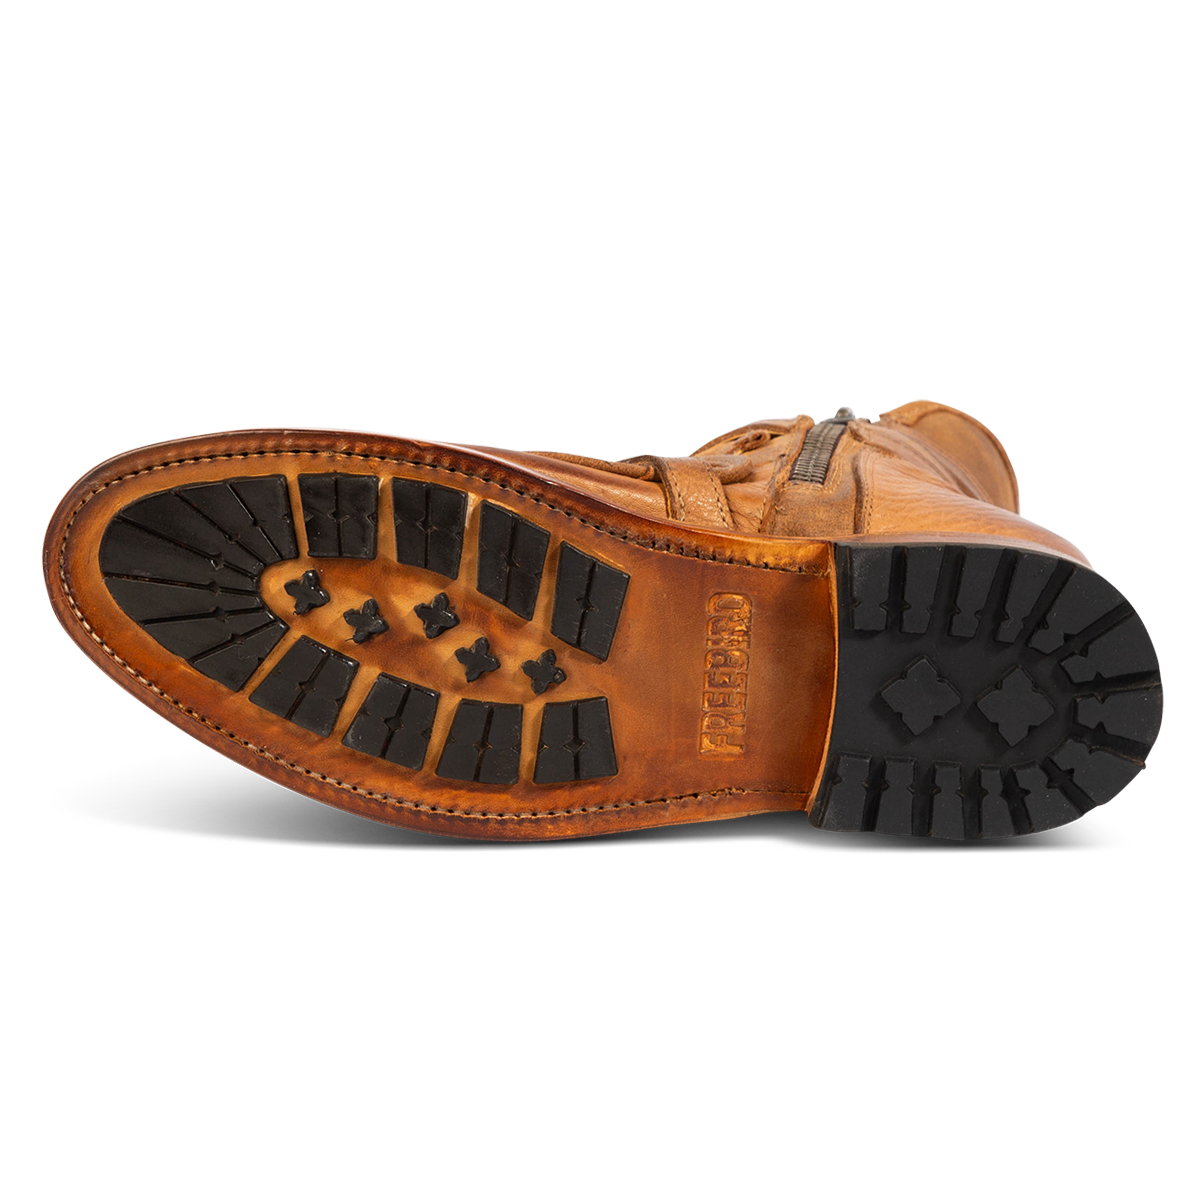 Rubber tread sole imprinted with FREEBIRD on men's Pantera tan boot